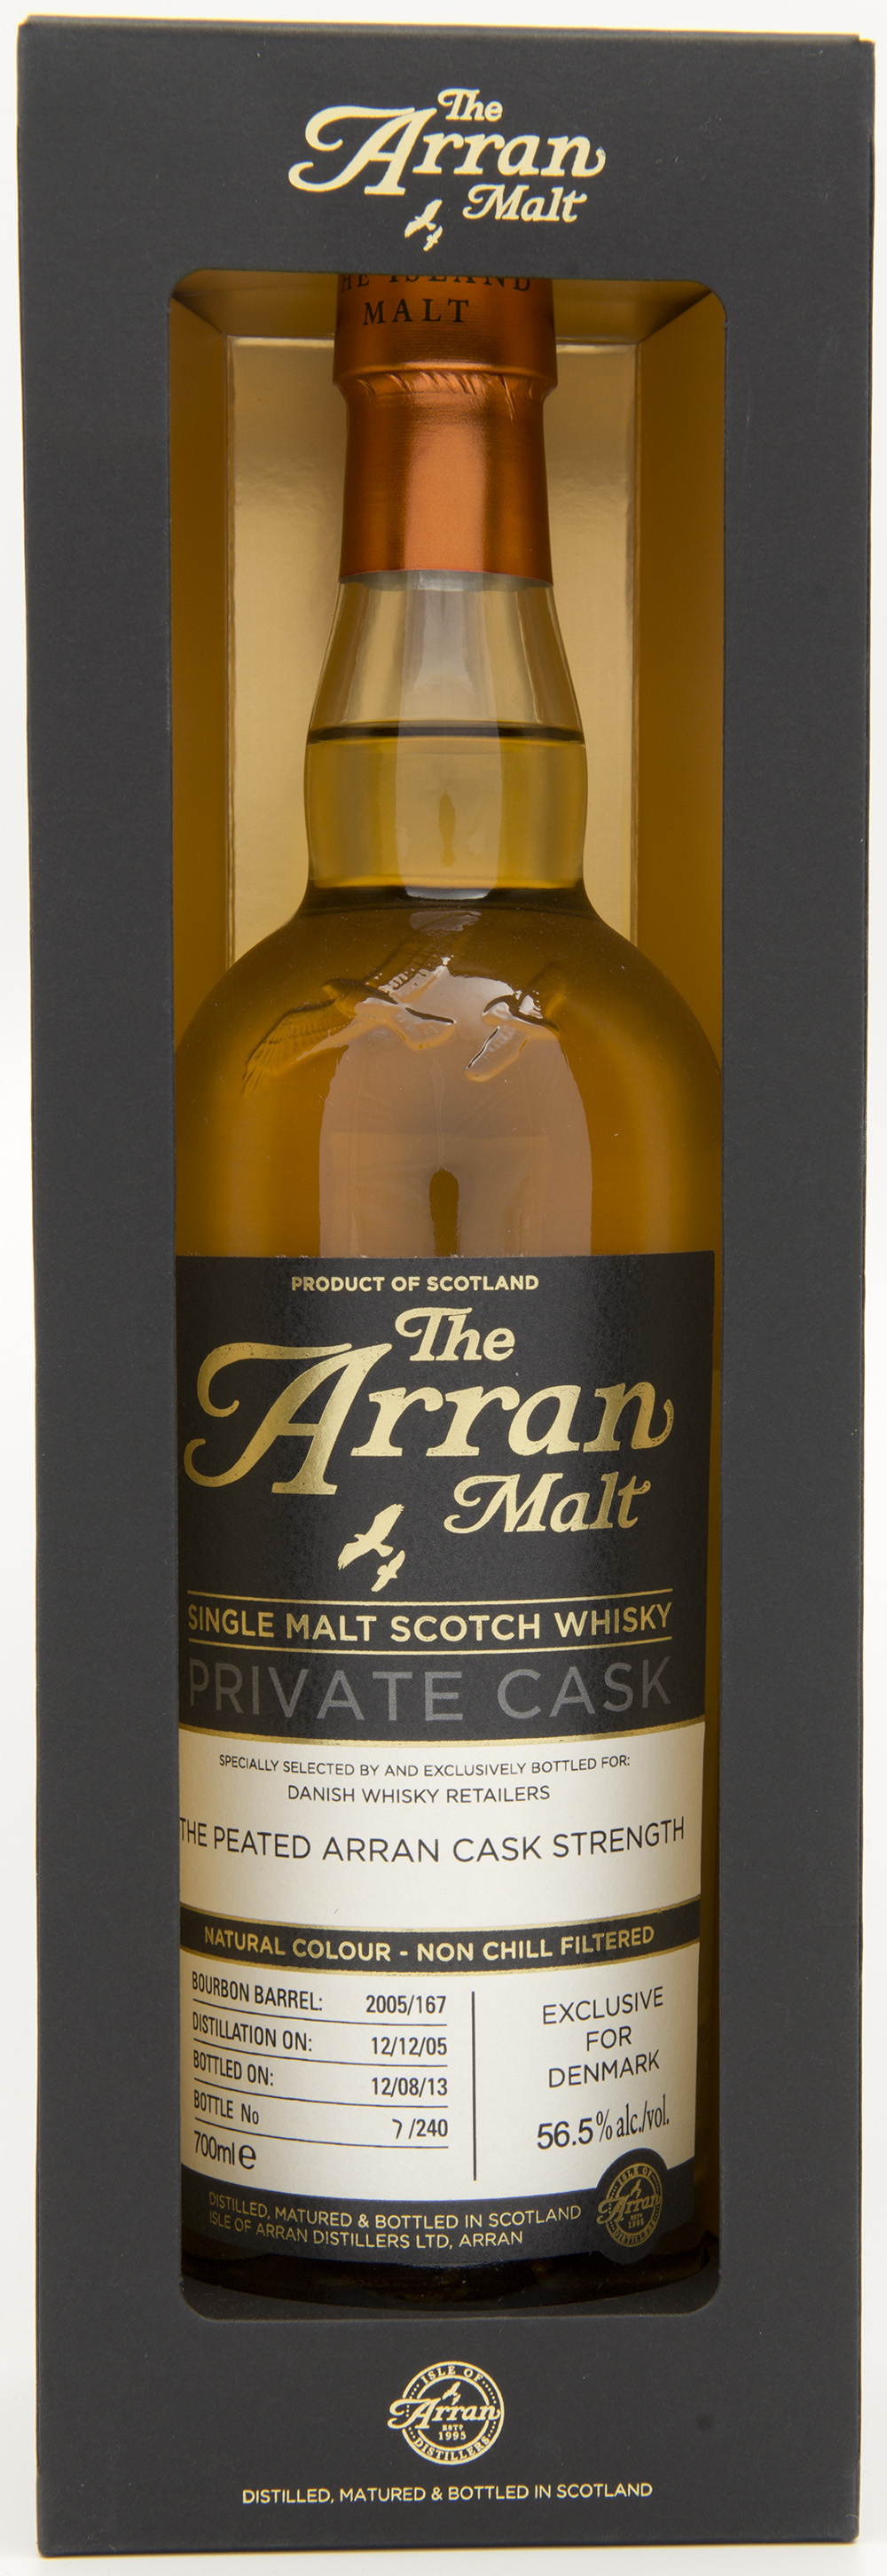 Billede: DSC_4821 - The Arran Malt - Private Cask - Danish Whisky Retailers The Peated Arran Cask Strength.jpg